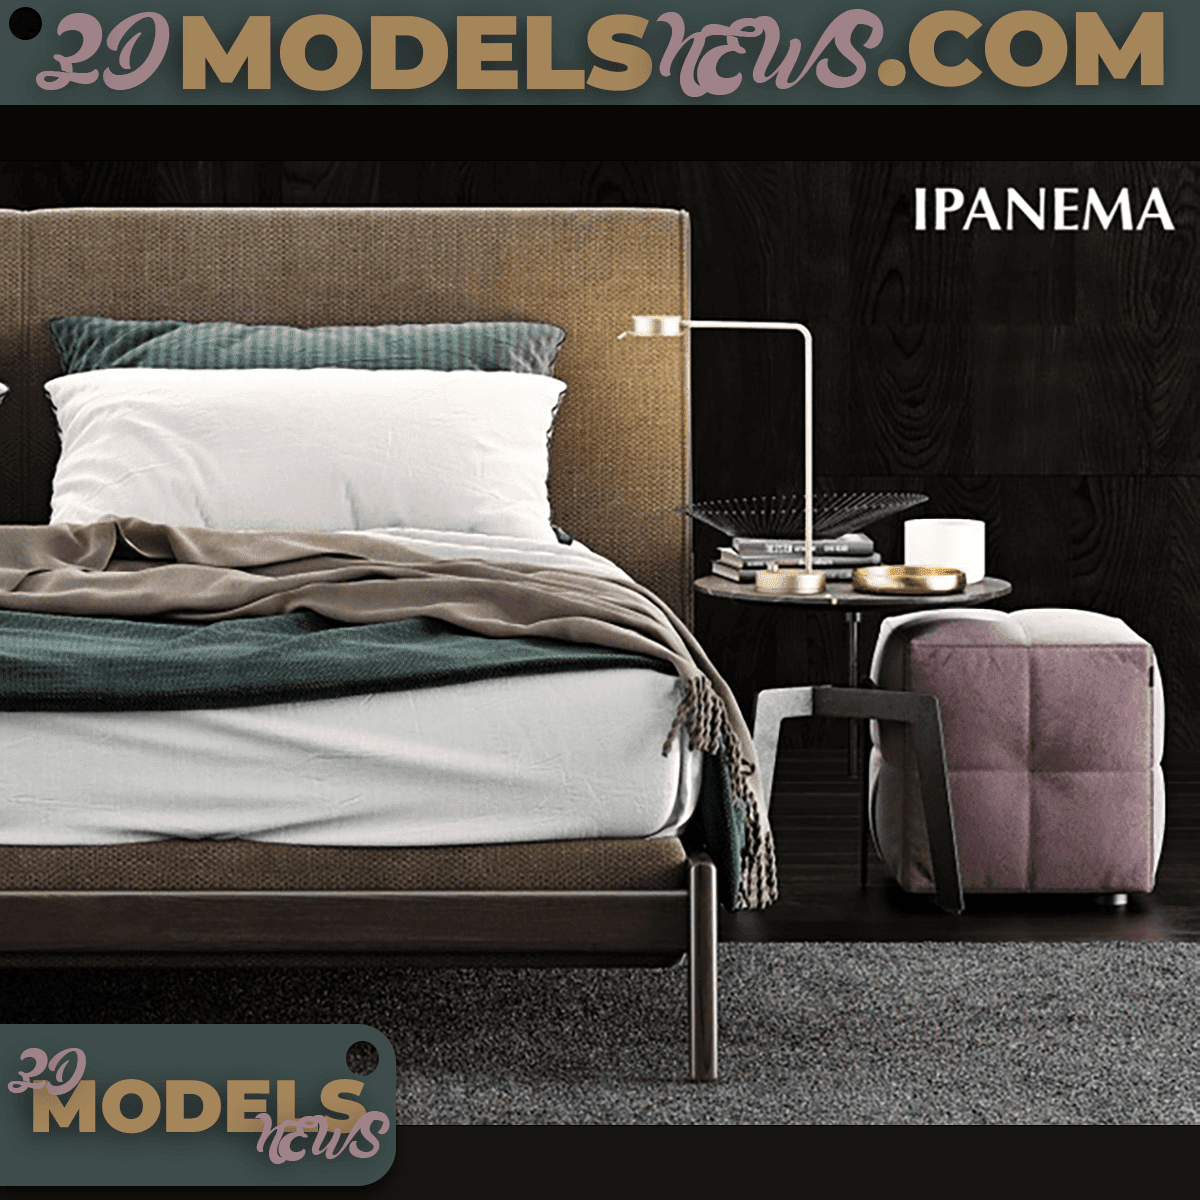 Poliform lpanema Bed Model 9